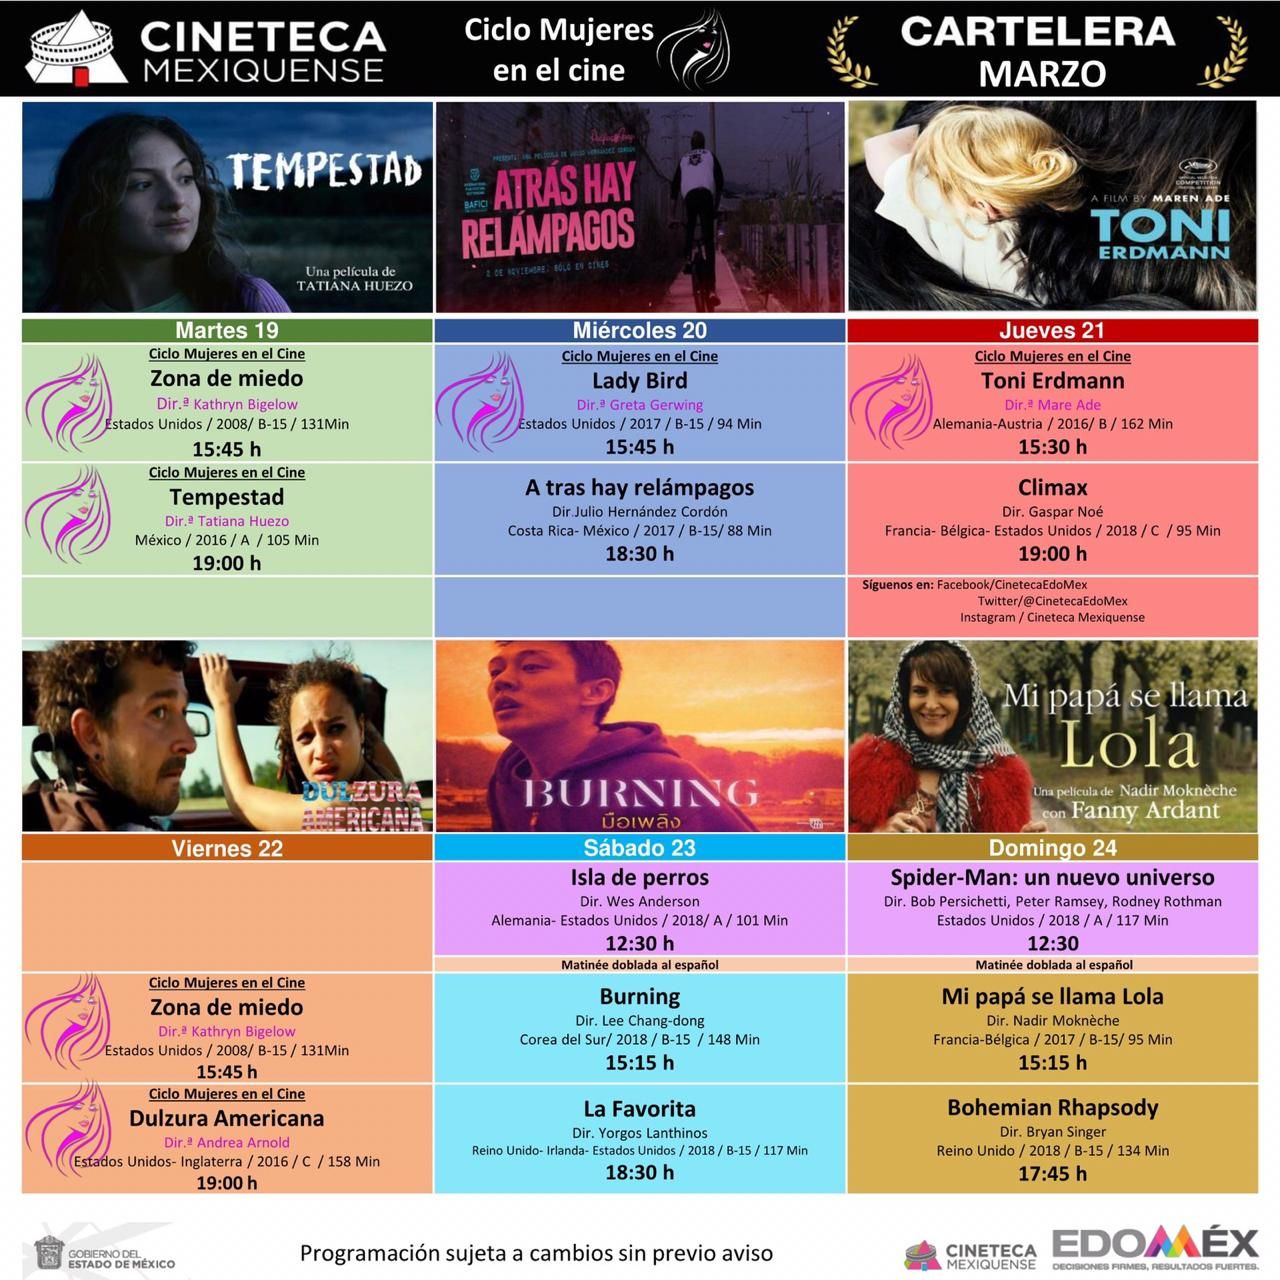 Invitan a disfrutar de la cineteca mexiquense el fin de semana 
 